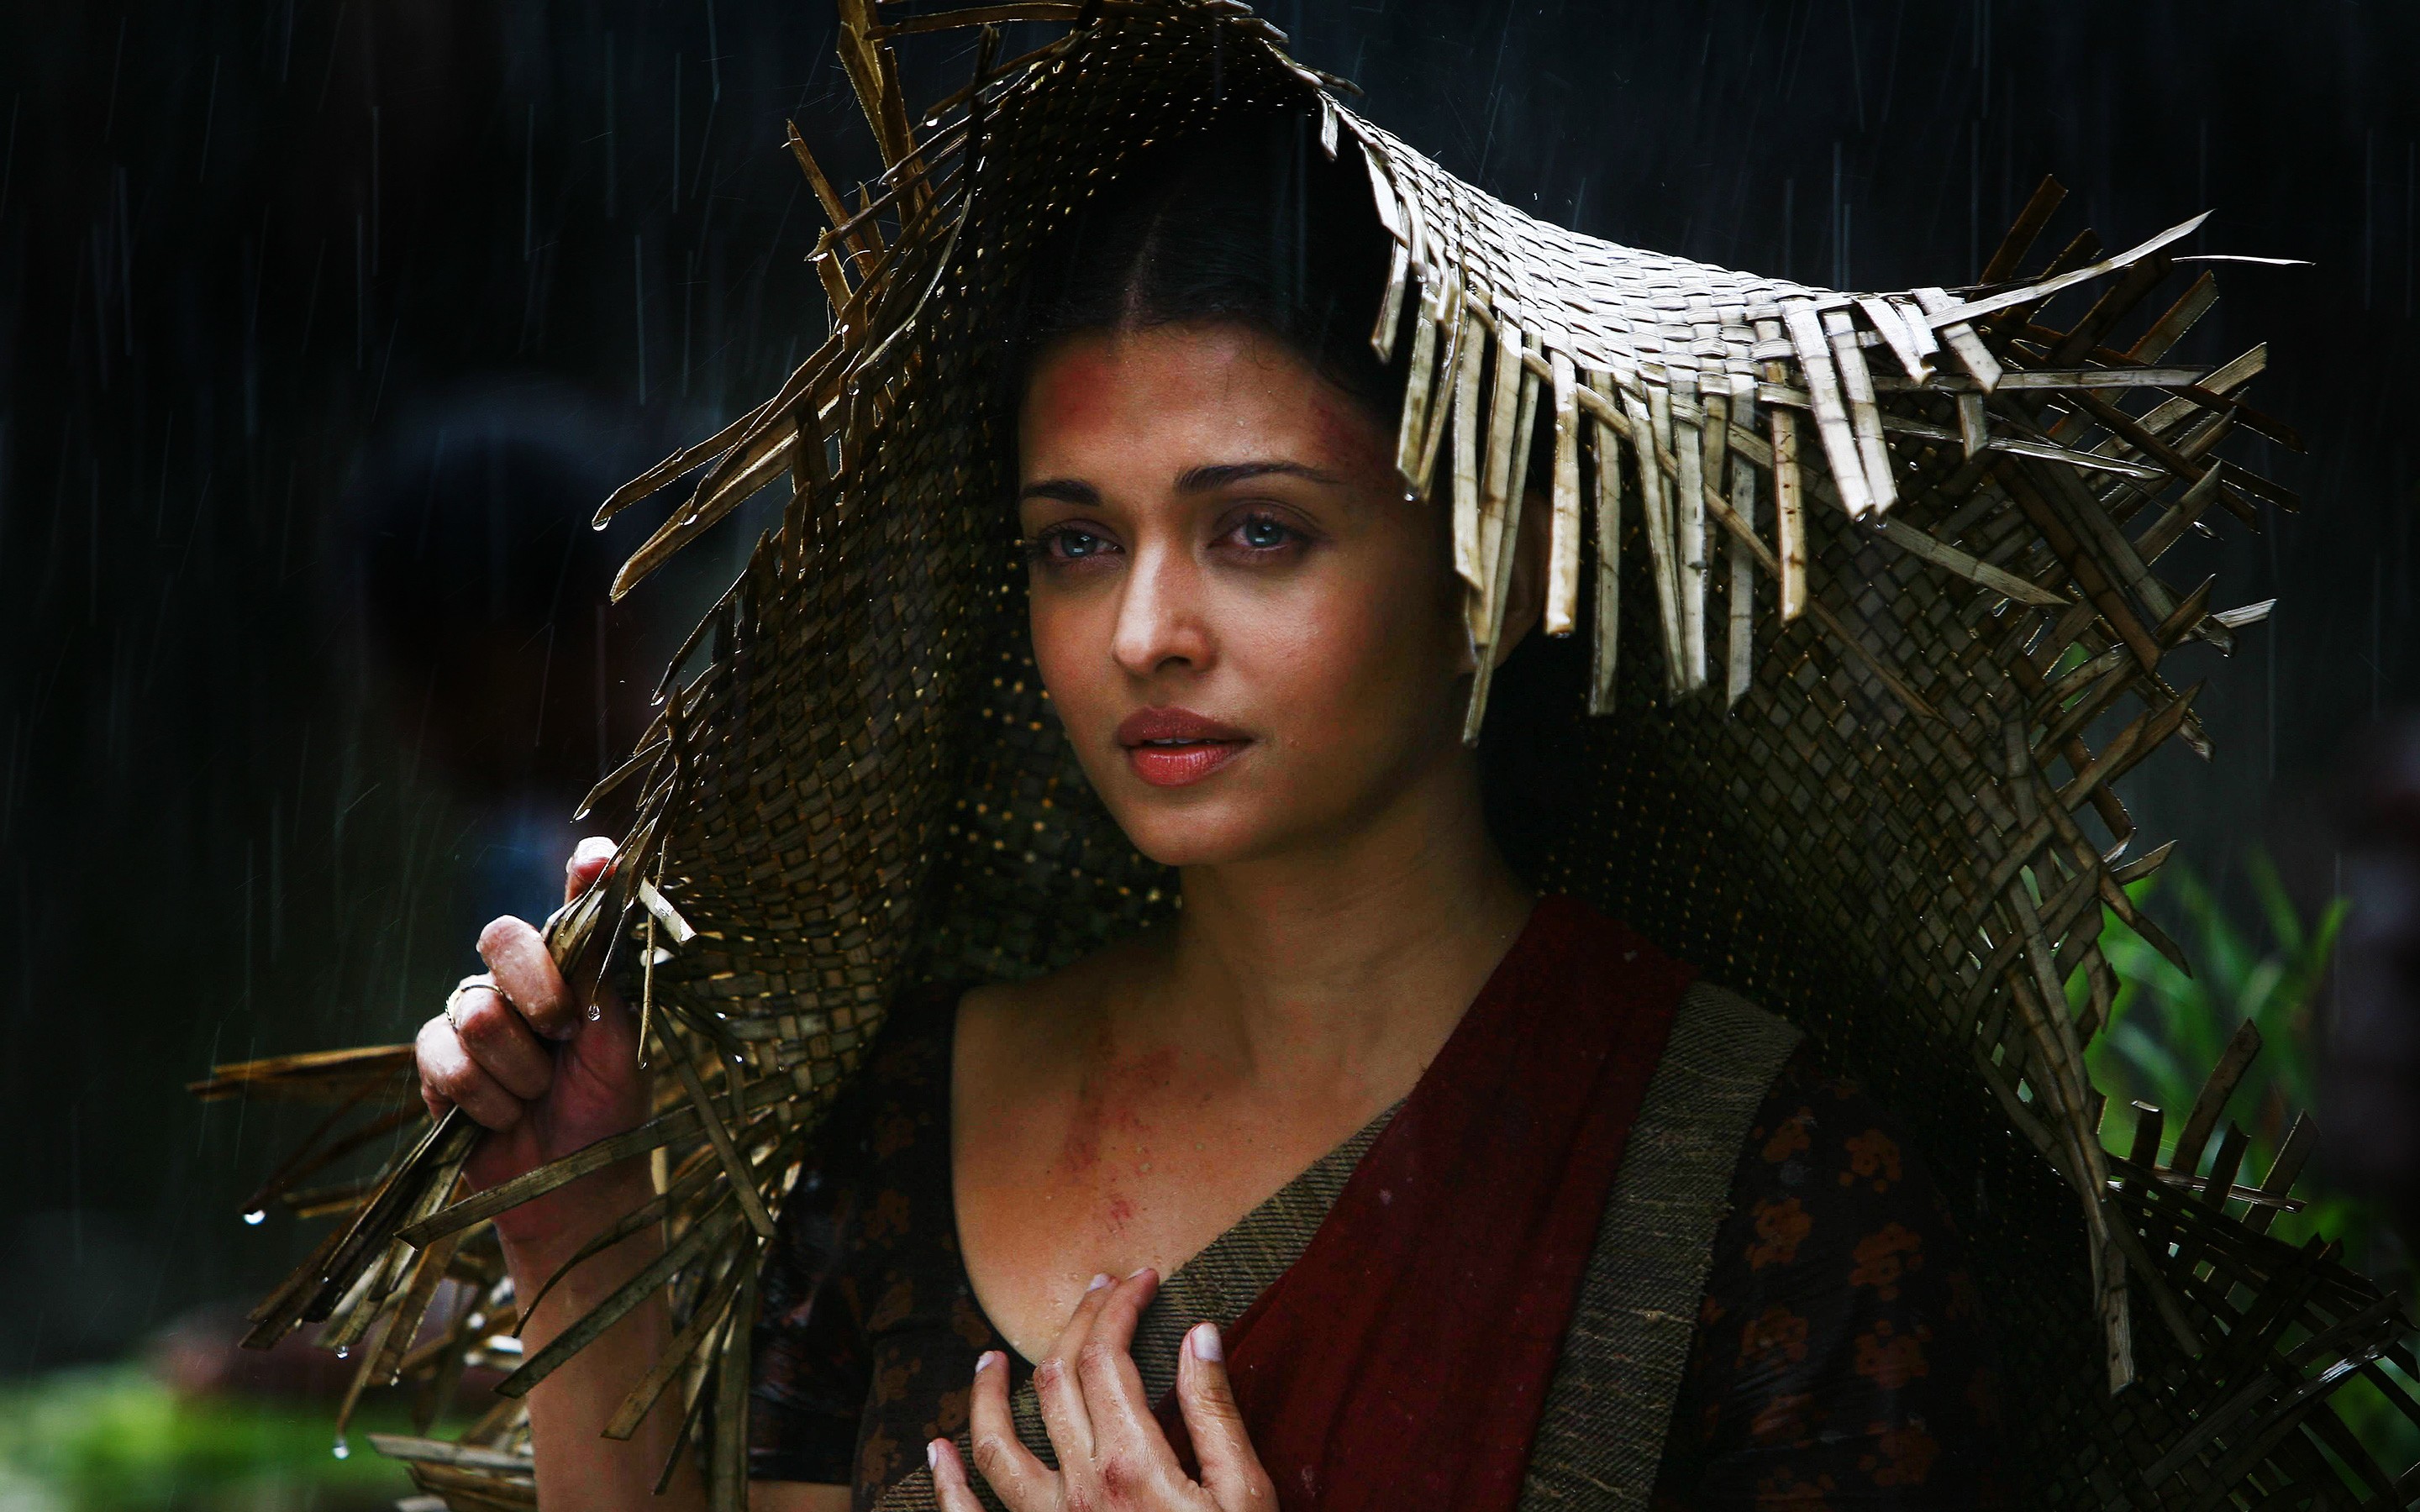 People 2880x1800 actress Aishwarya Rai Bachchan women Bollywood portrait indian women rain red lipstick low light